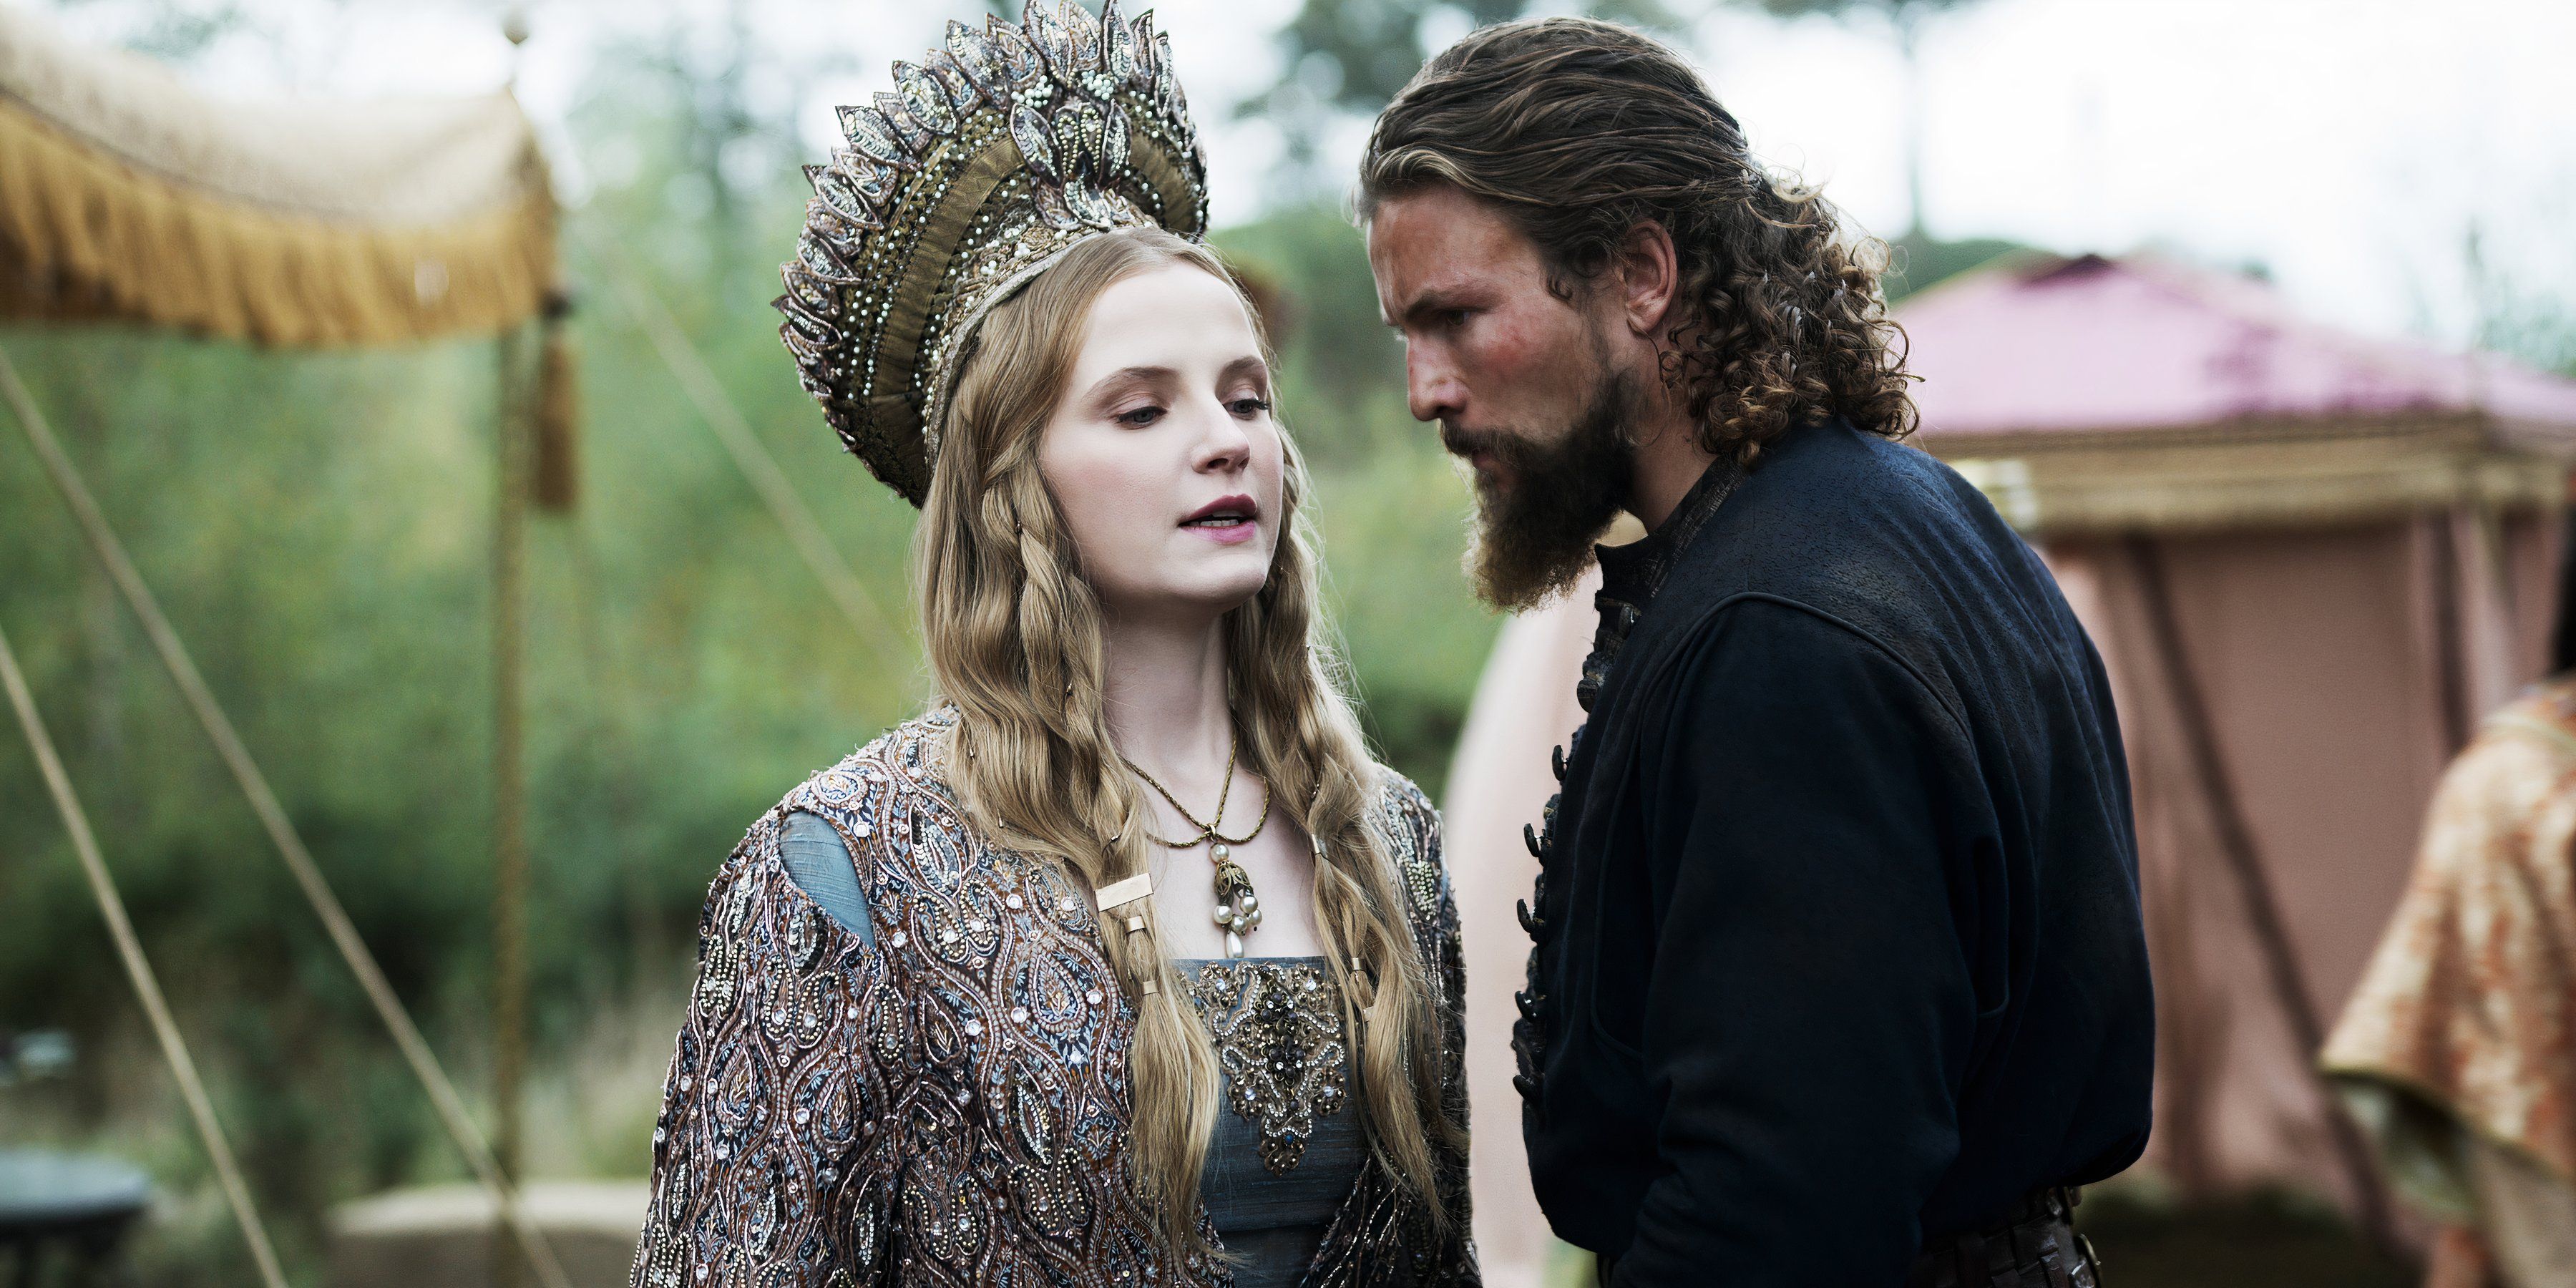 Vikings Valhalla season 2 Eleana as Empress Zoe and Harald